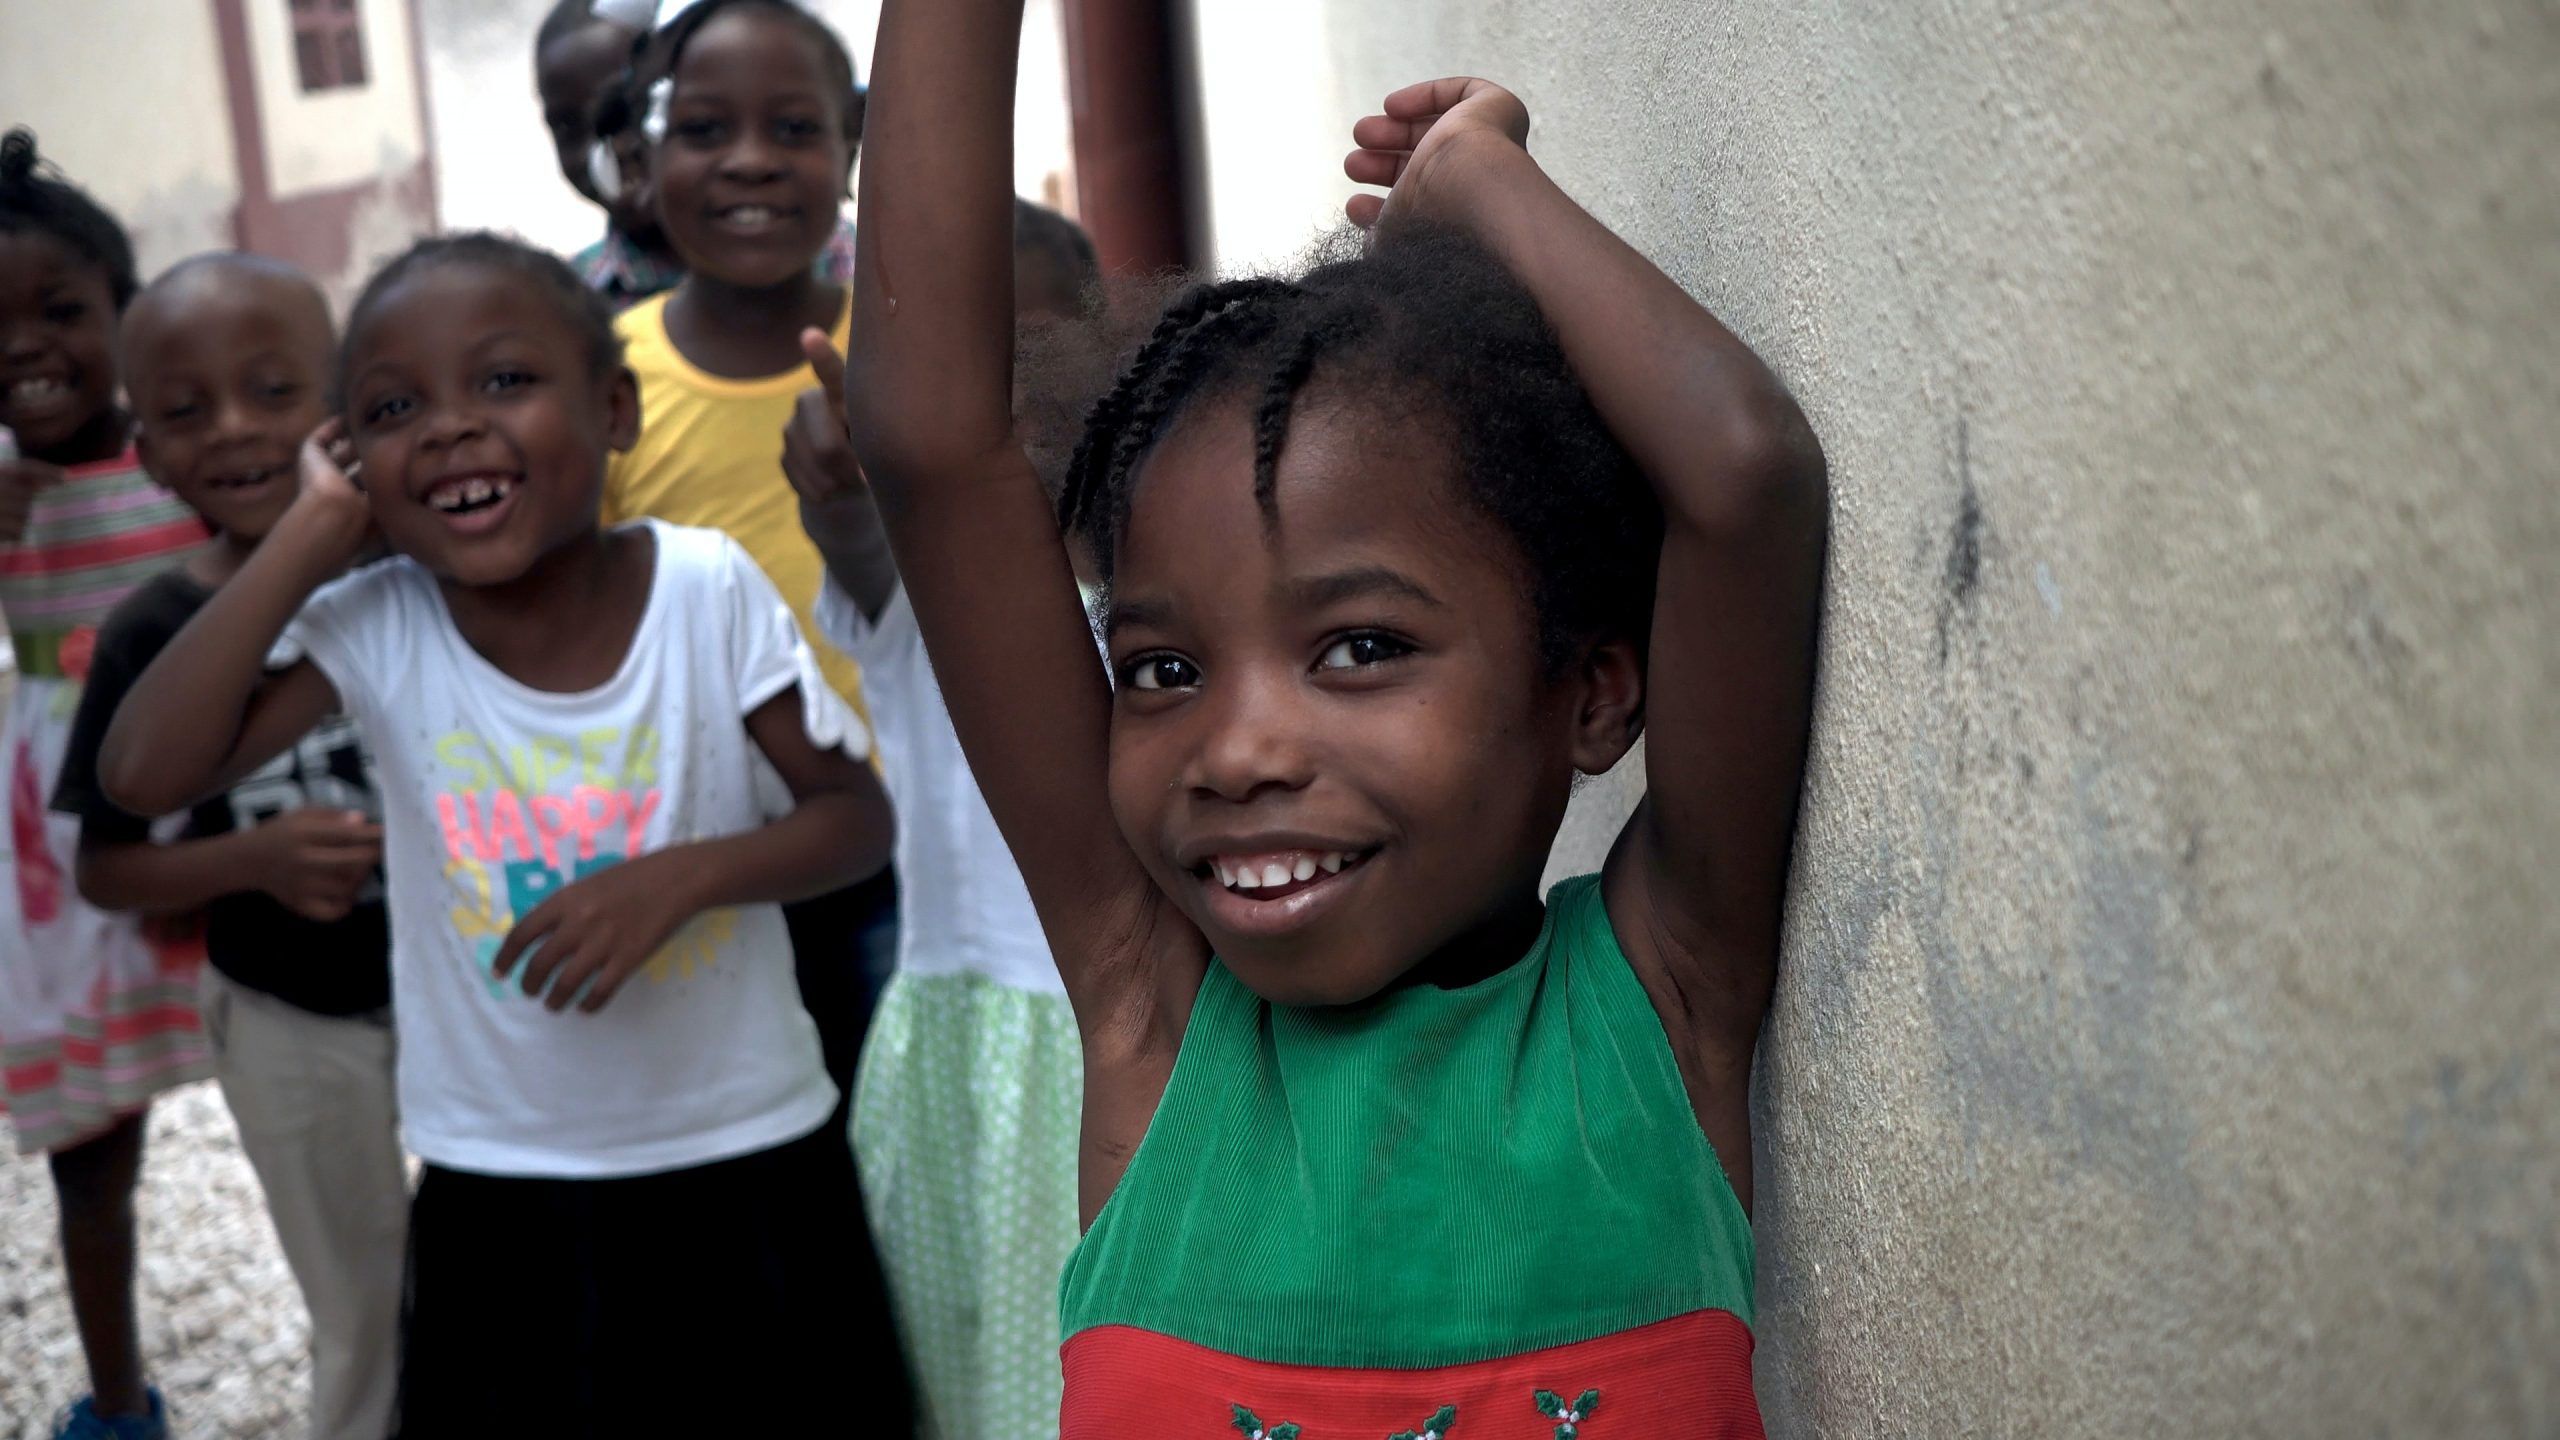 Haitian children’s educational mobile program Lakou Kajou on Viamo Platform wins MIT Award